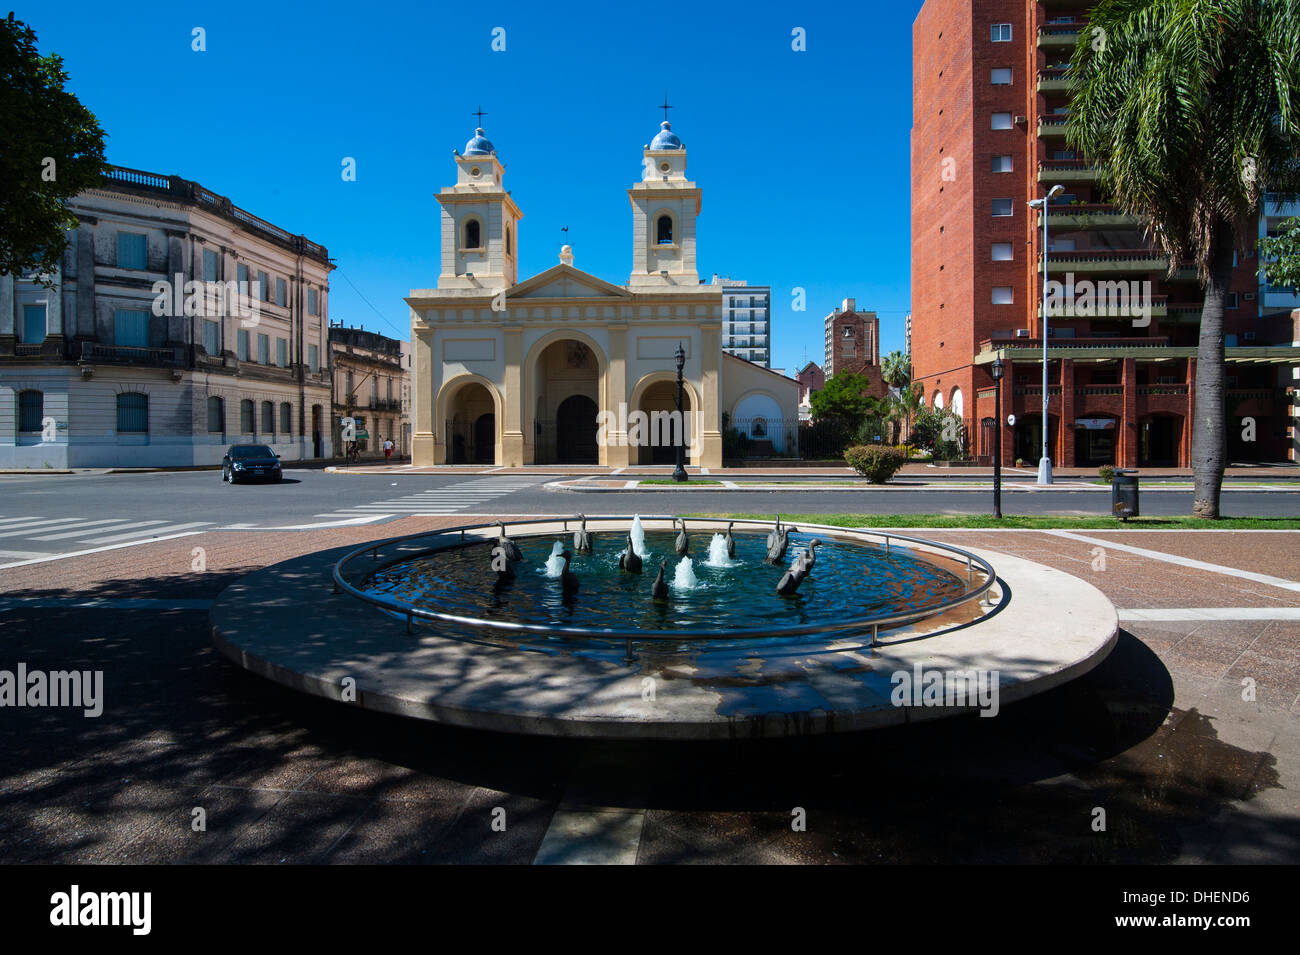 Santa Fe, capitale de la province de Santa Fe, Argentine Banque D'Images